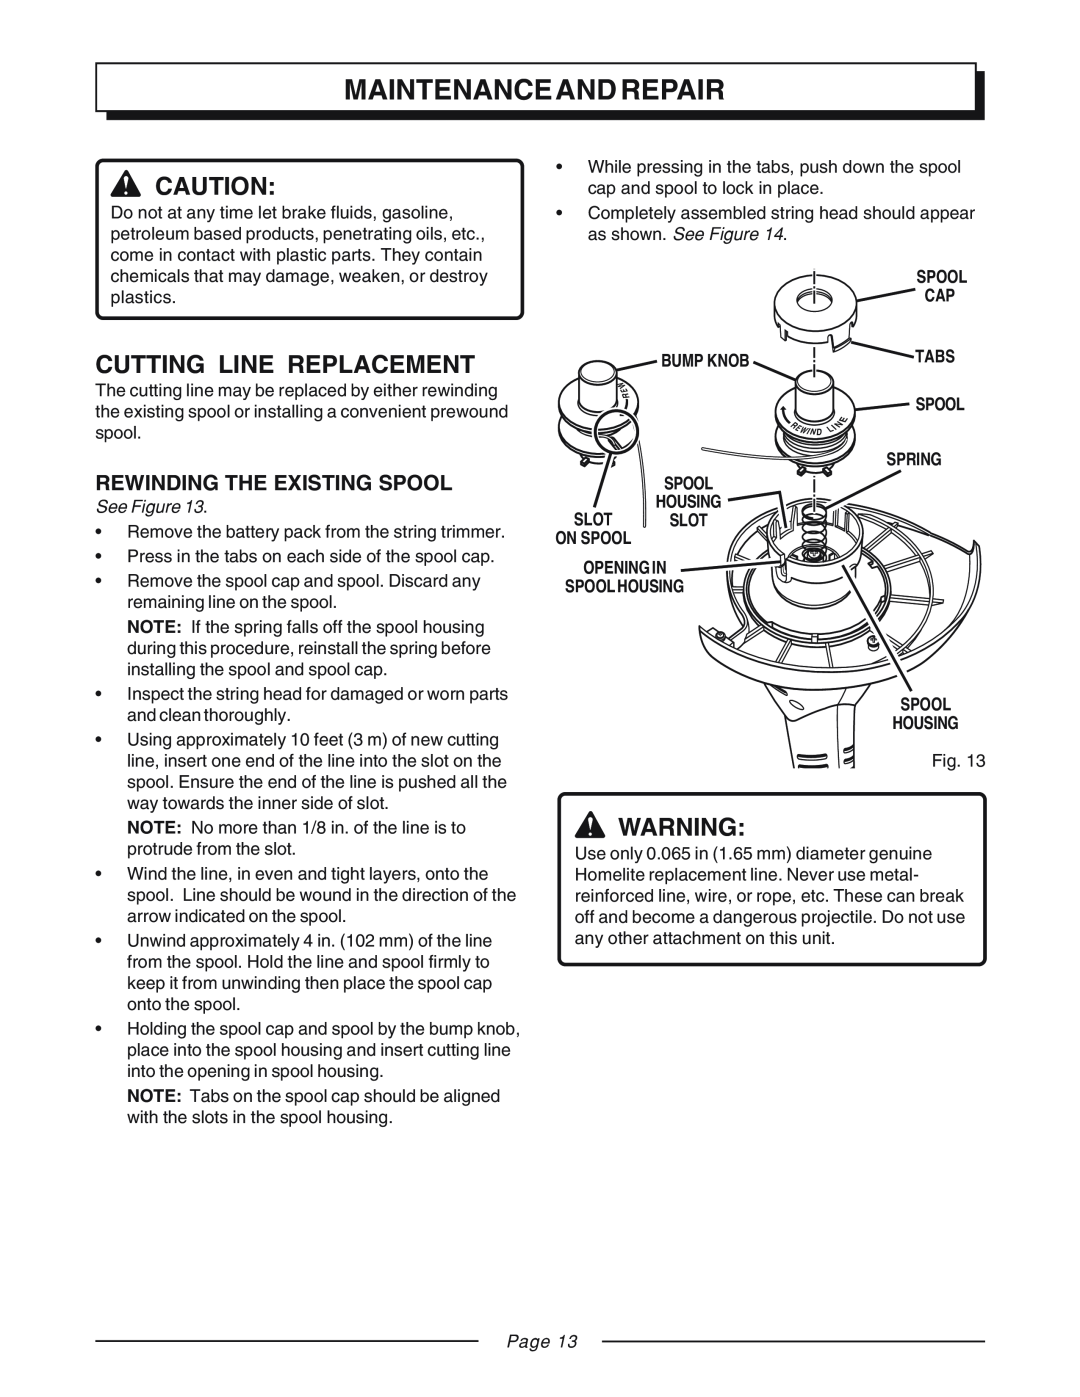 Homelite UT31810 Maintenance And Repair, Cutting Line Replacement, Rewinding The Existing Spool, Spool Cap, Bump Knob 